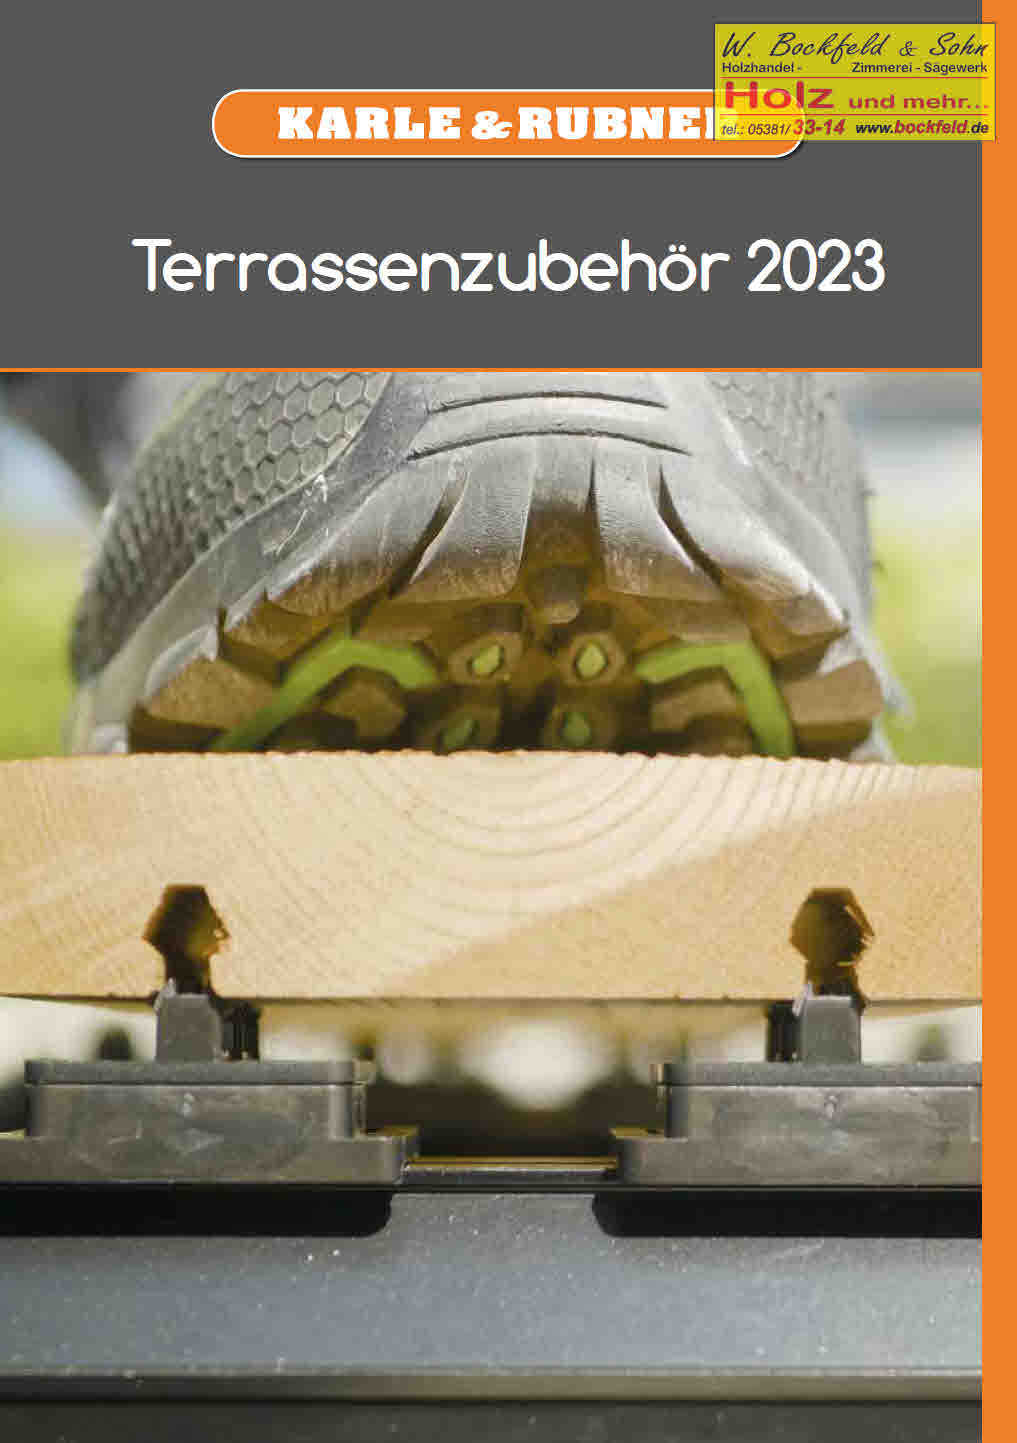 KR katalog zubehoer 2023 wbs seite1 - Kataloge